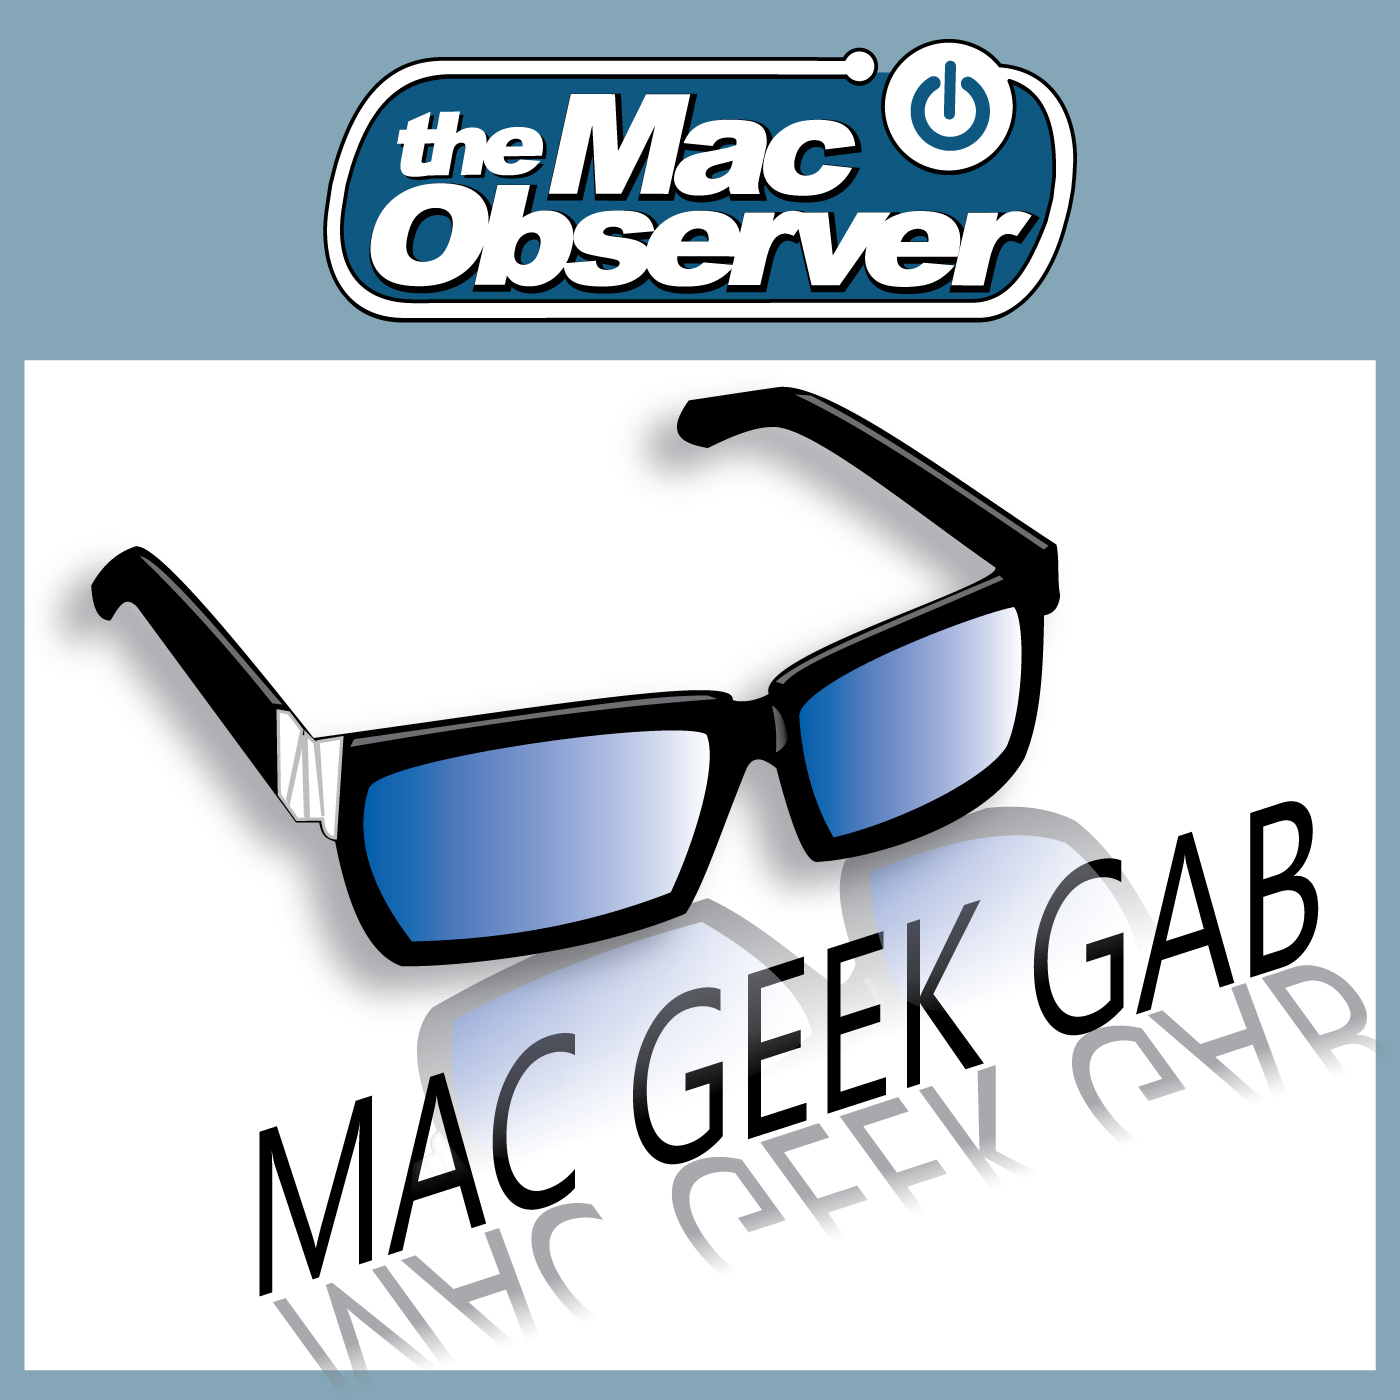 MacGeekGab podcast logo